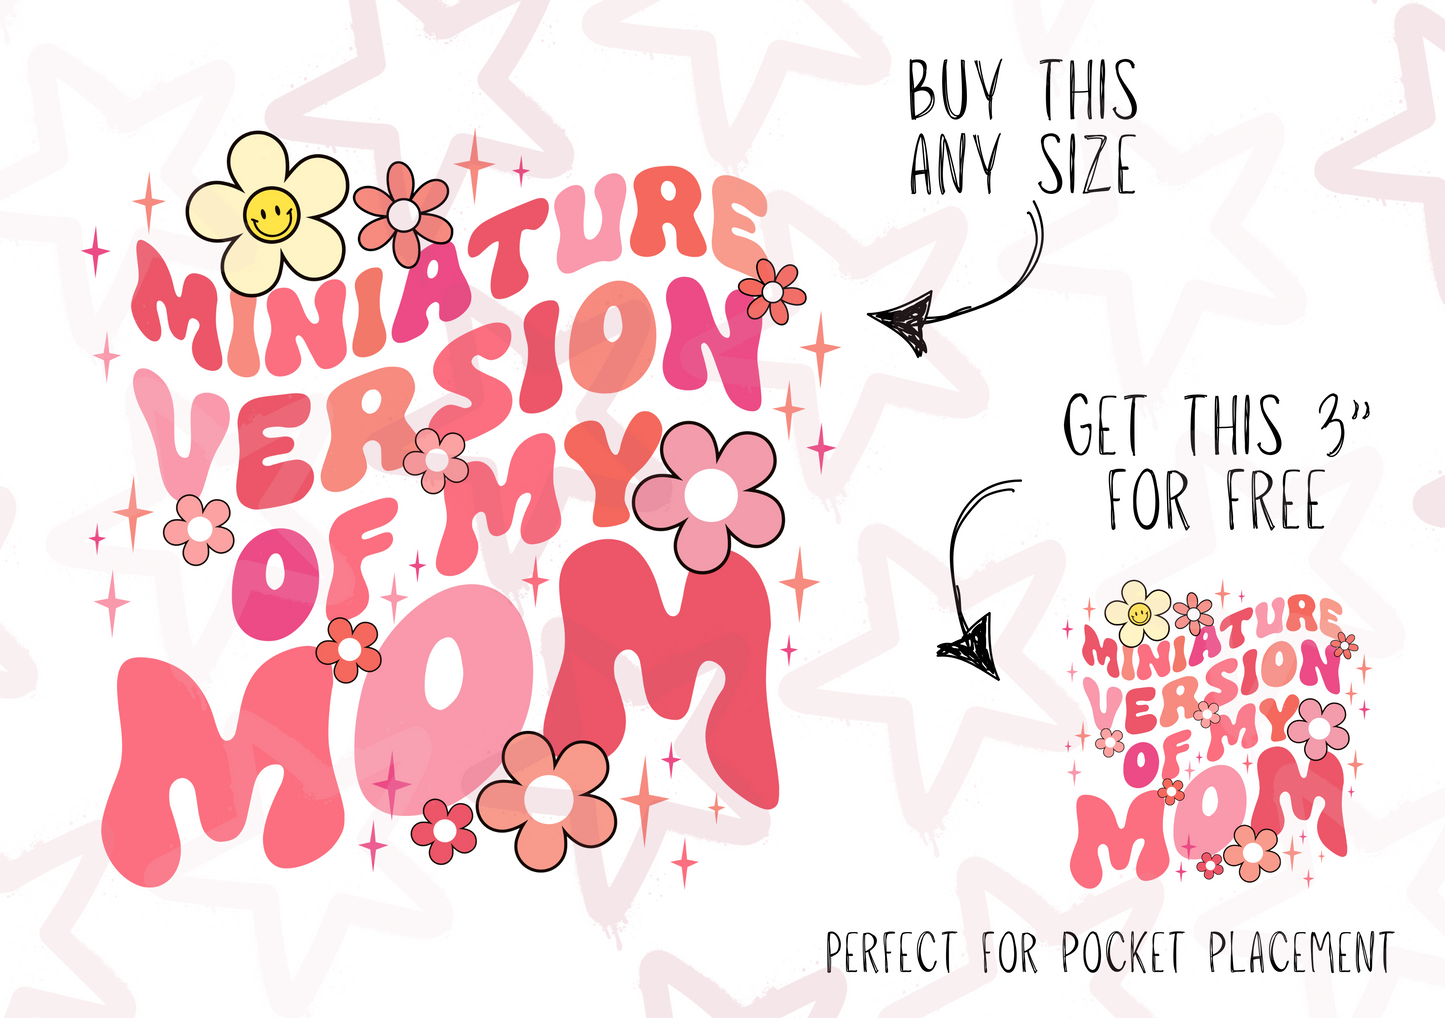 Miniature Version Of My Mum | Kids Slogan Designs | DTF transfer